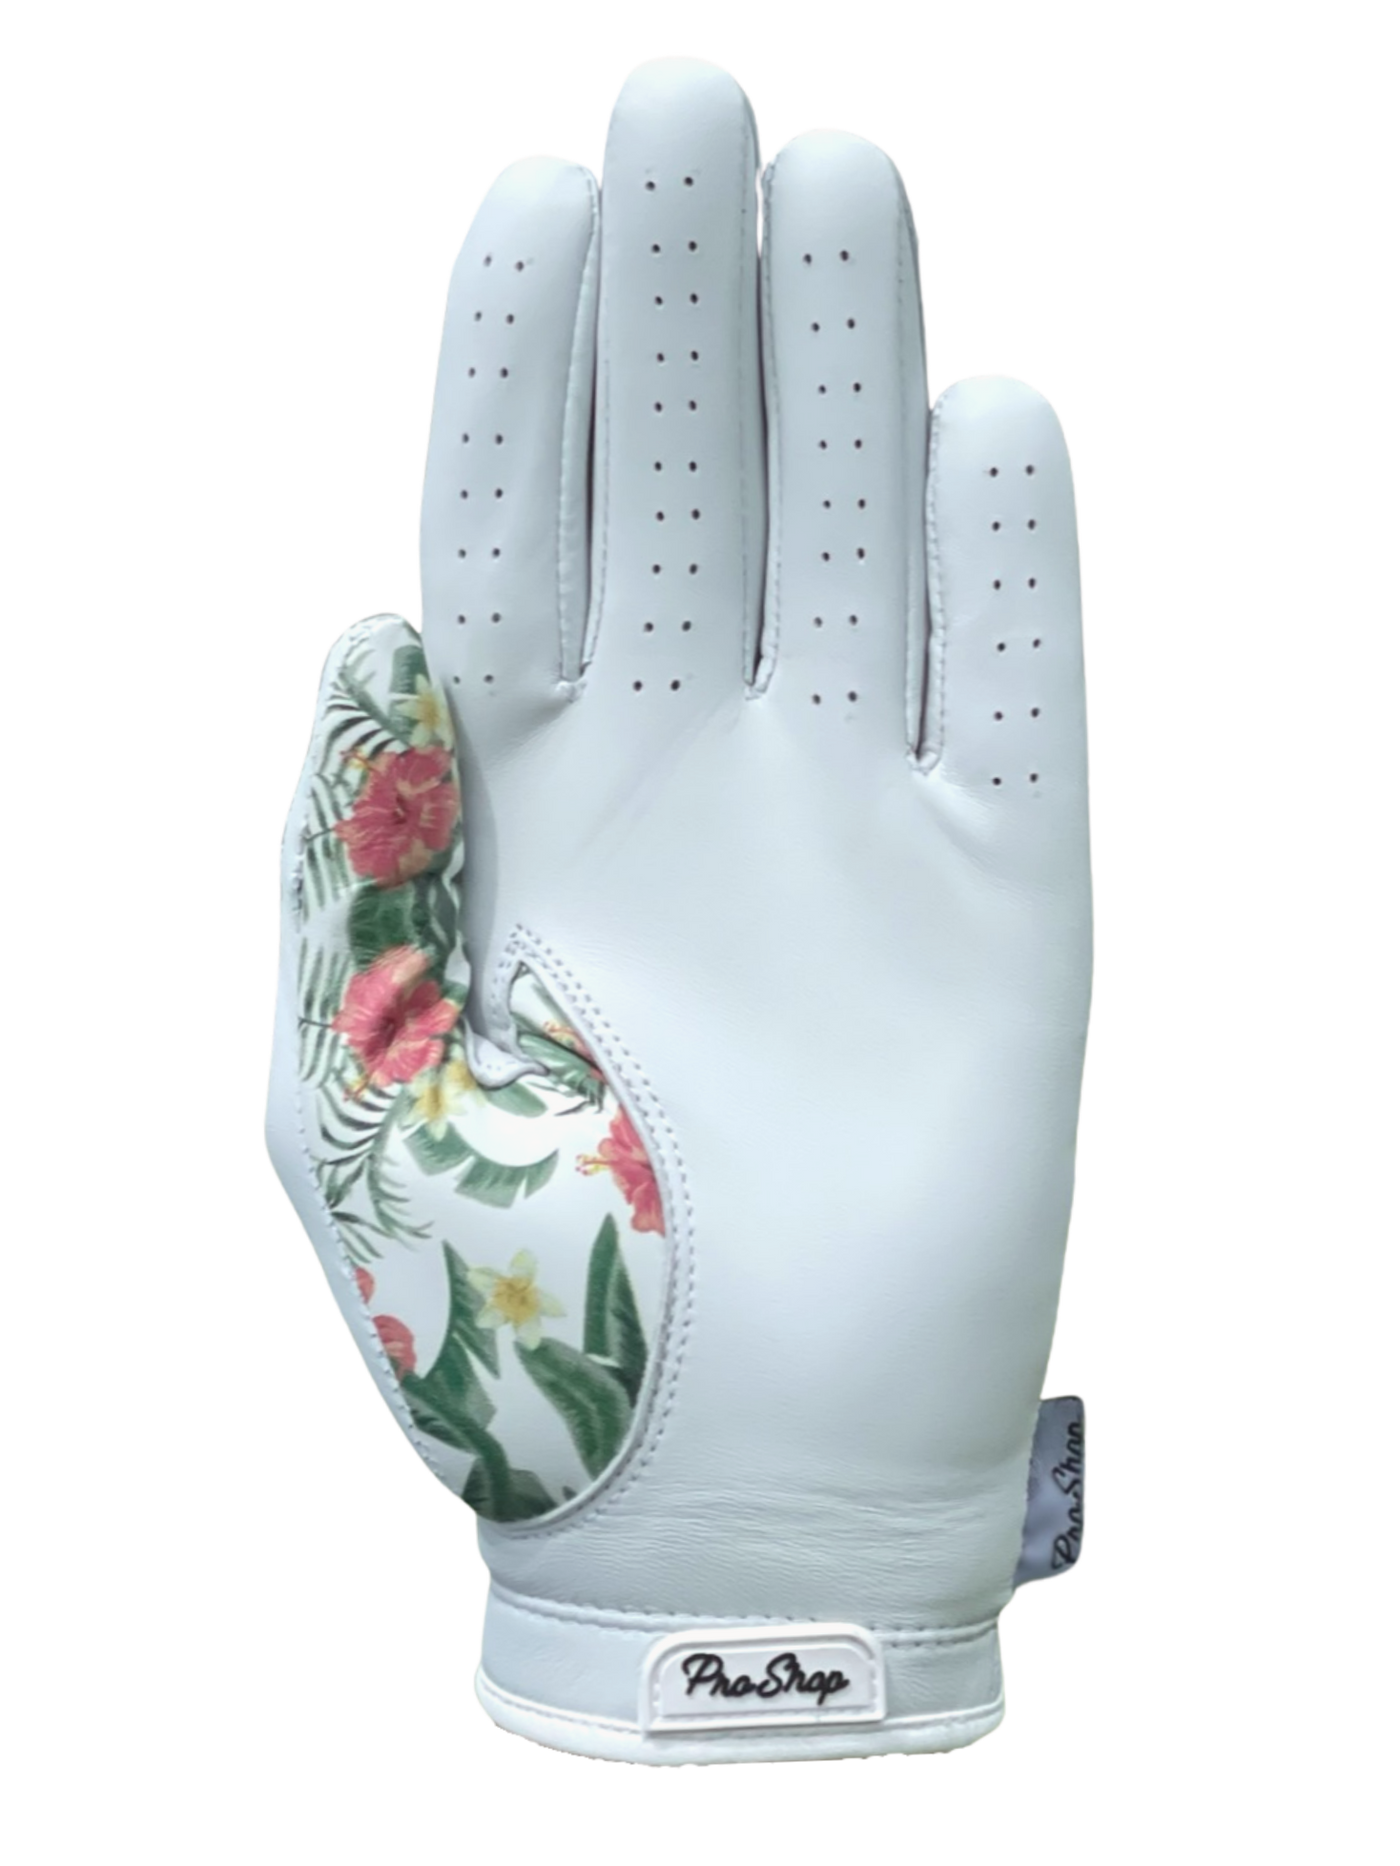 The Palm Glove